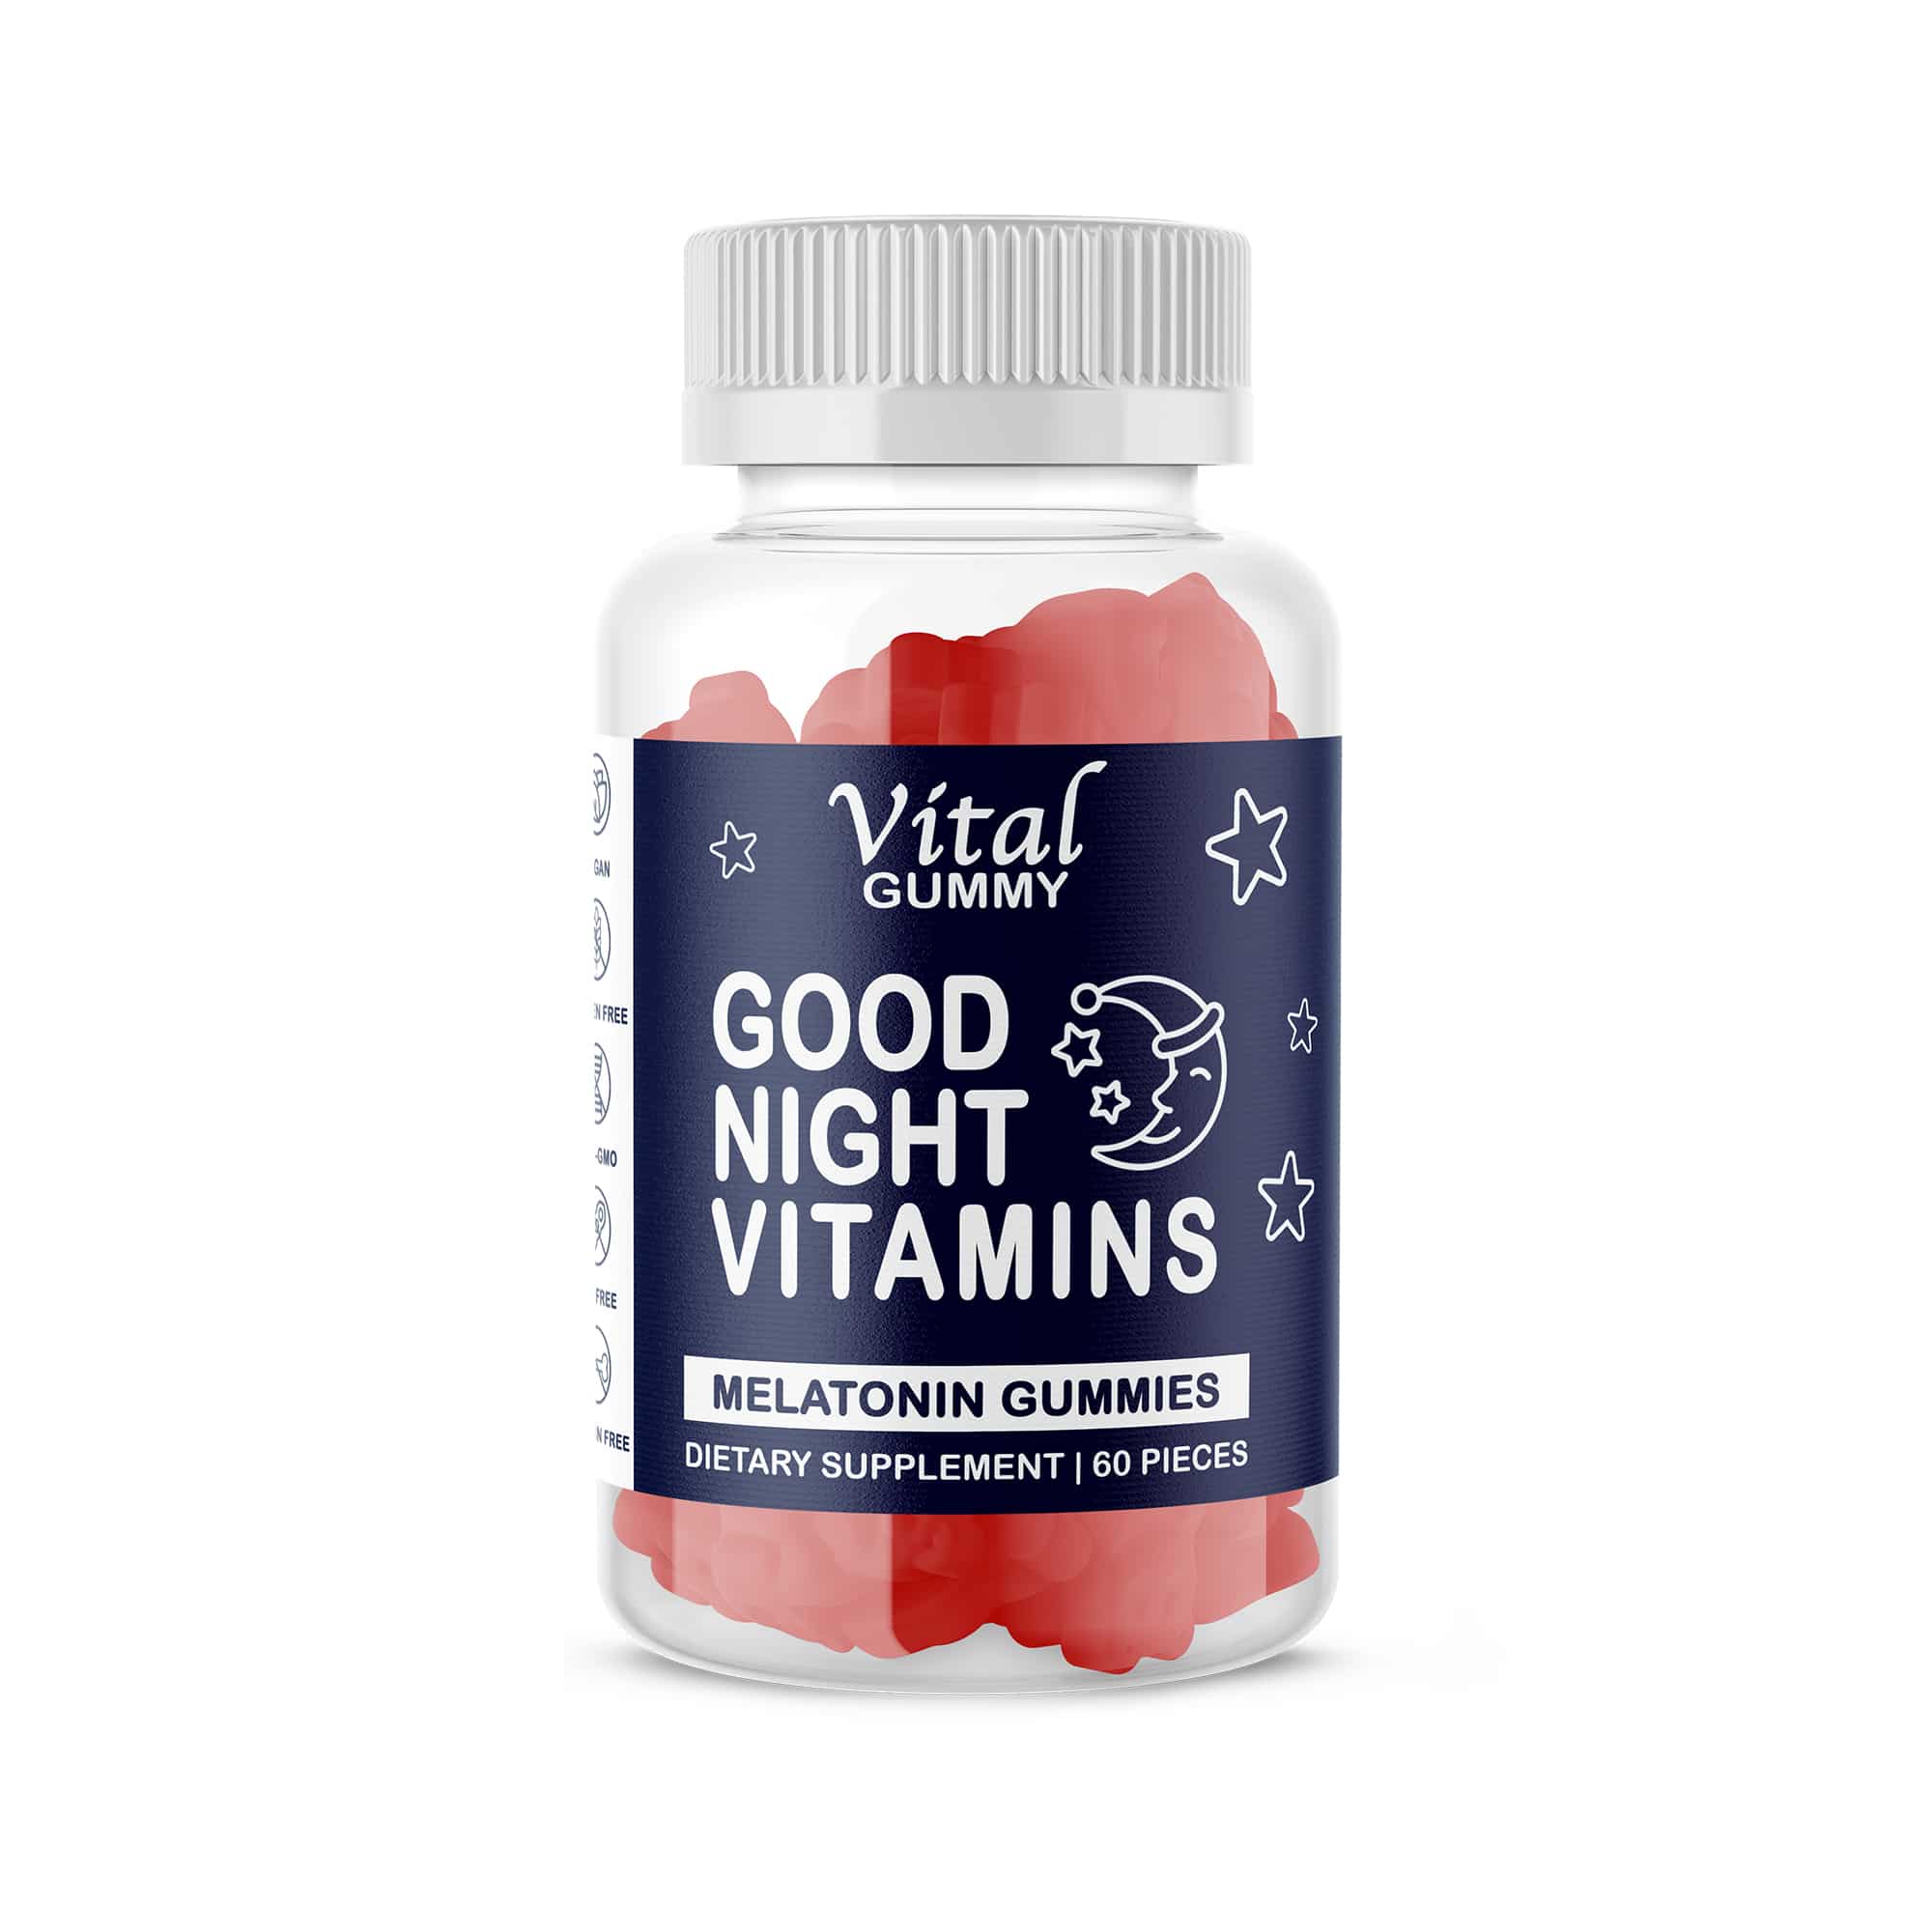 good night vitamins - vital gummy